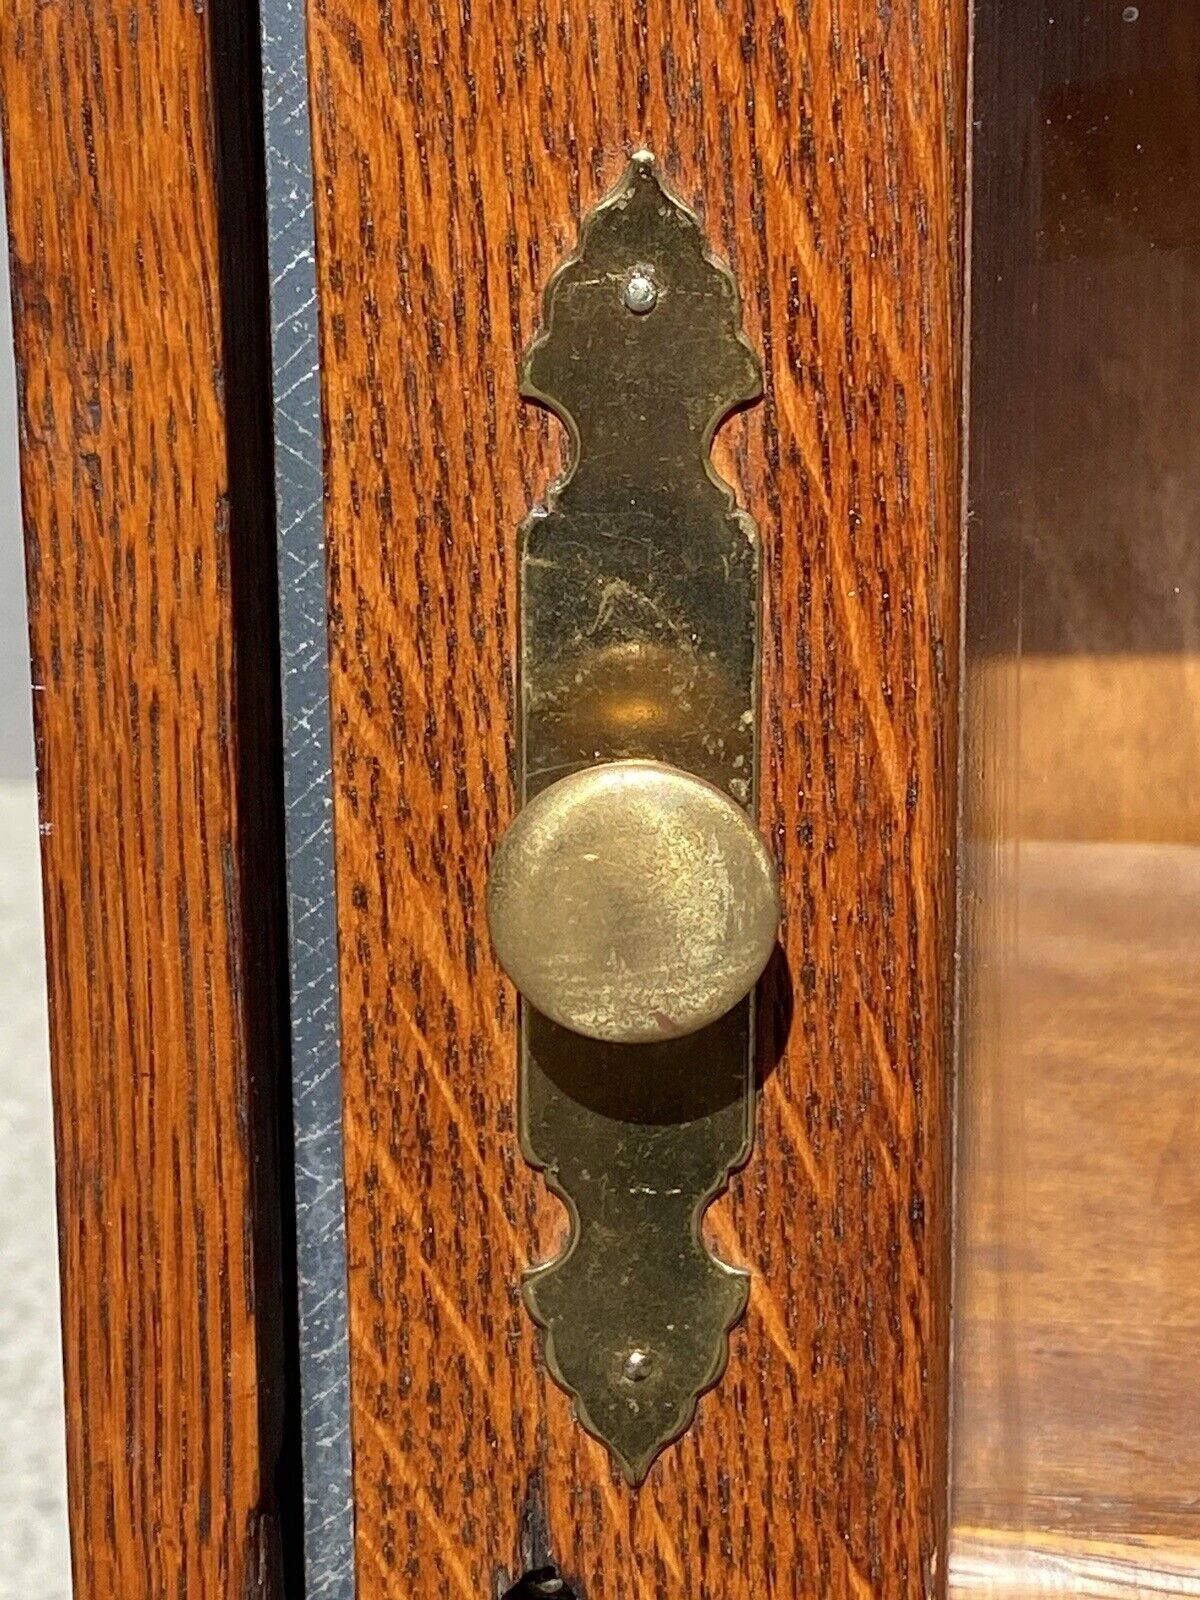 Antique Tiger Oak Larkin Single Door Bookcase / China Cabinet